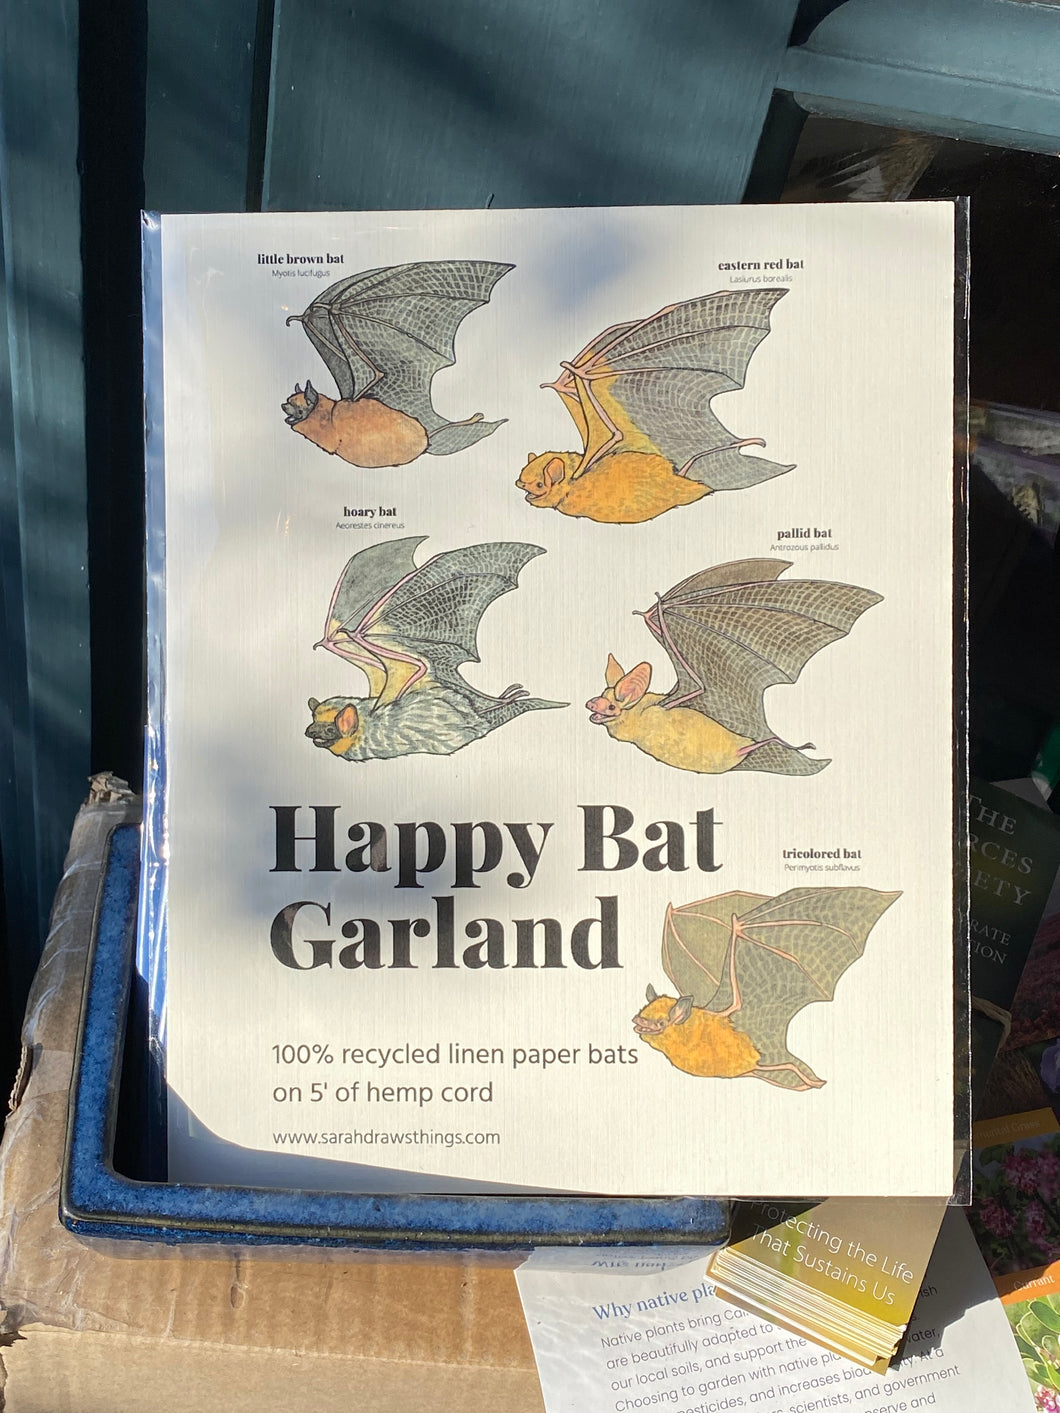 Happy Bats Garland - Pallid Bat - Little Brown Bat 100% recycled paper with hemp cord